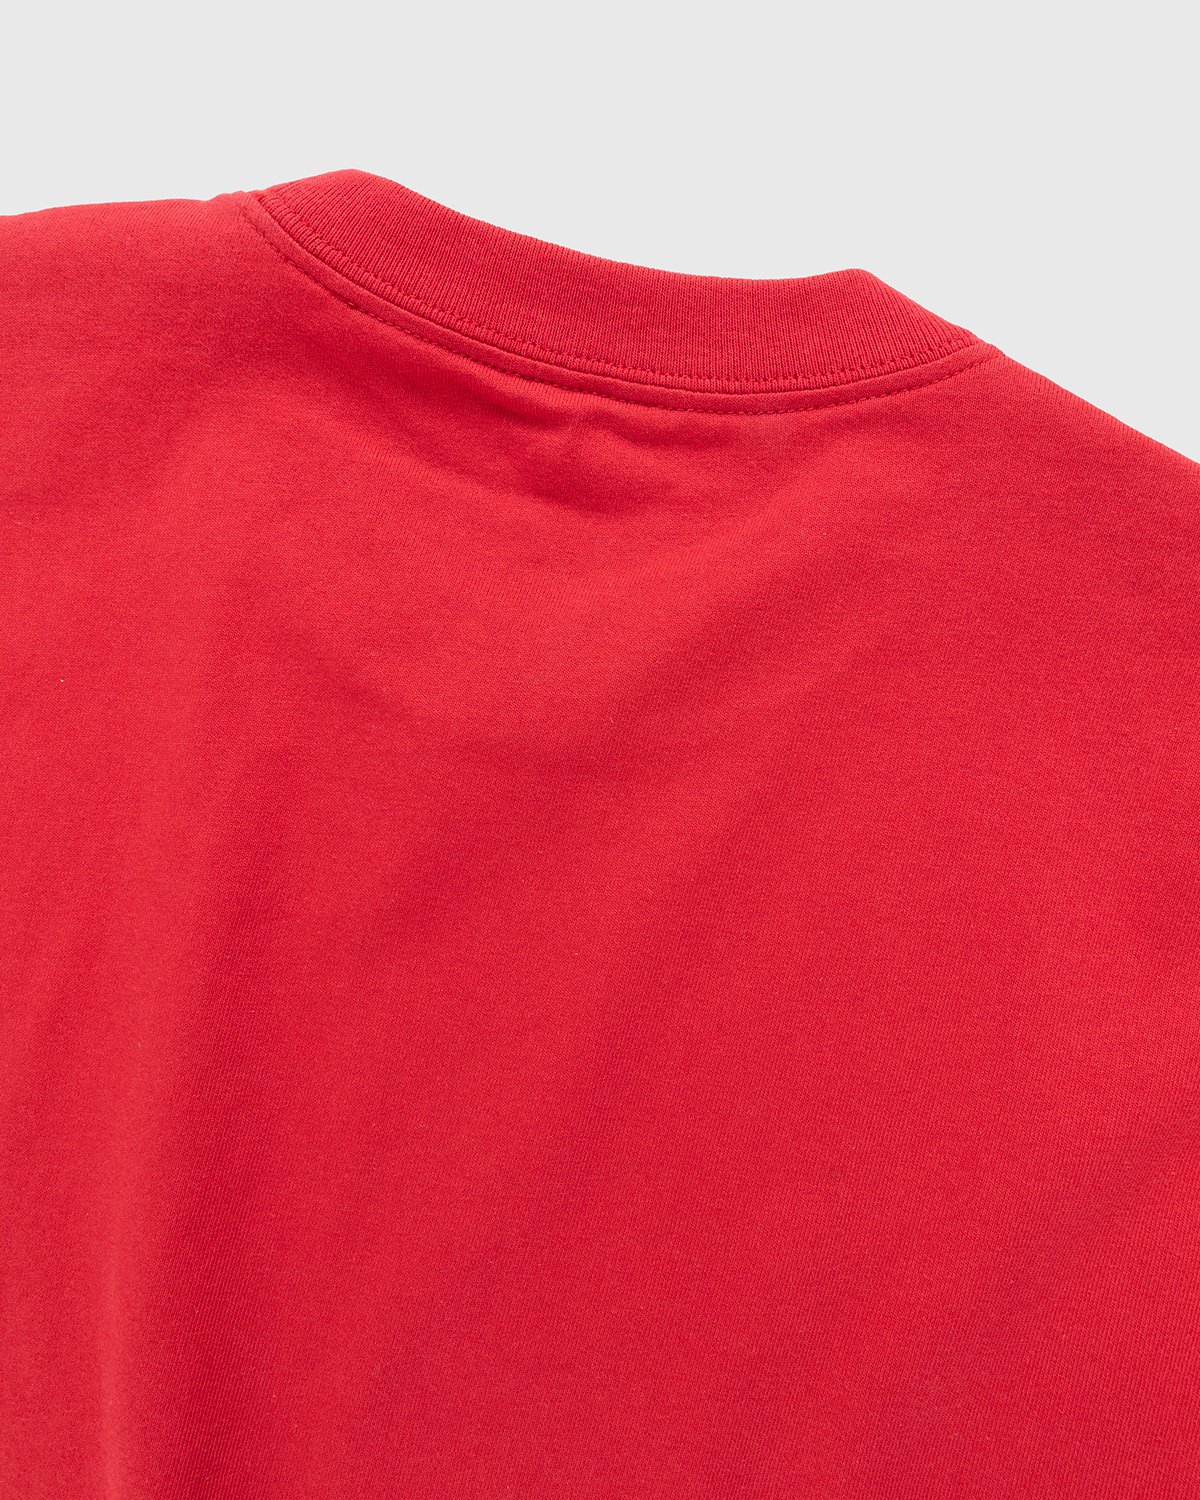 Carhartt WIP - University Script T-Shirt Cornel White - Clothing - Red - Image 3